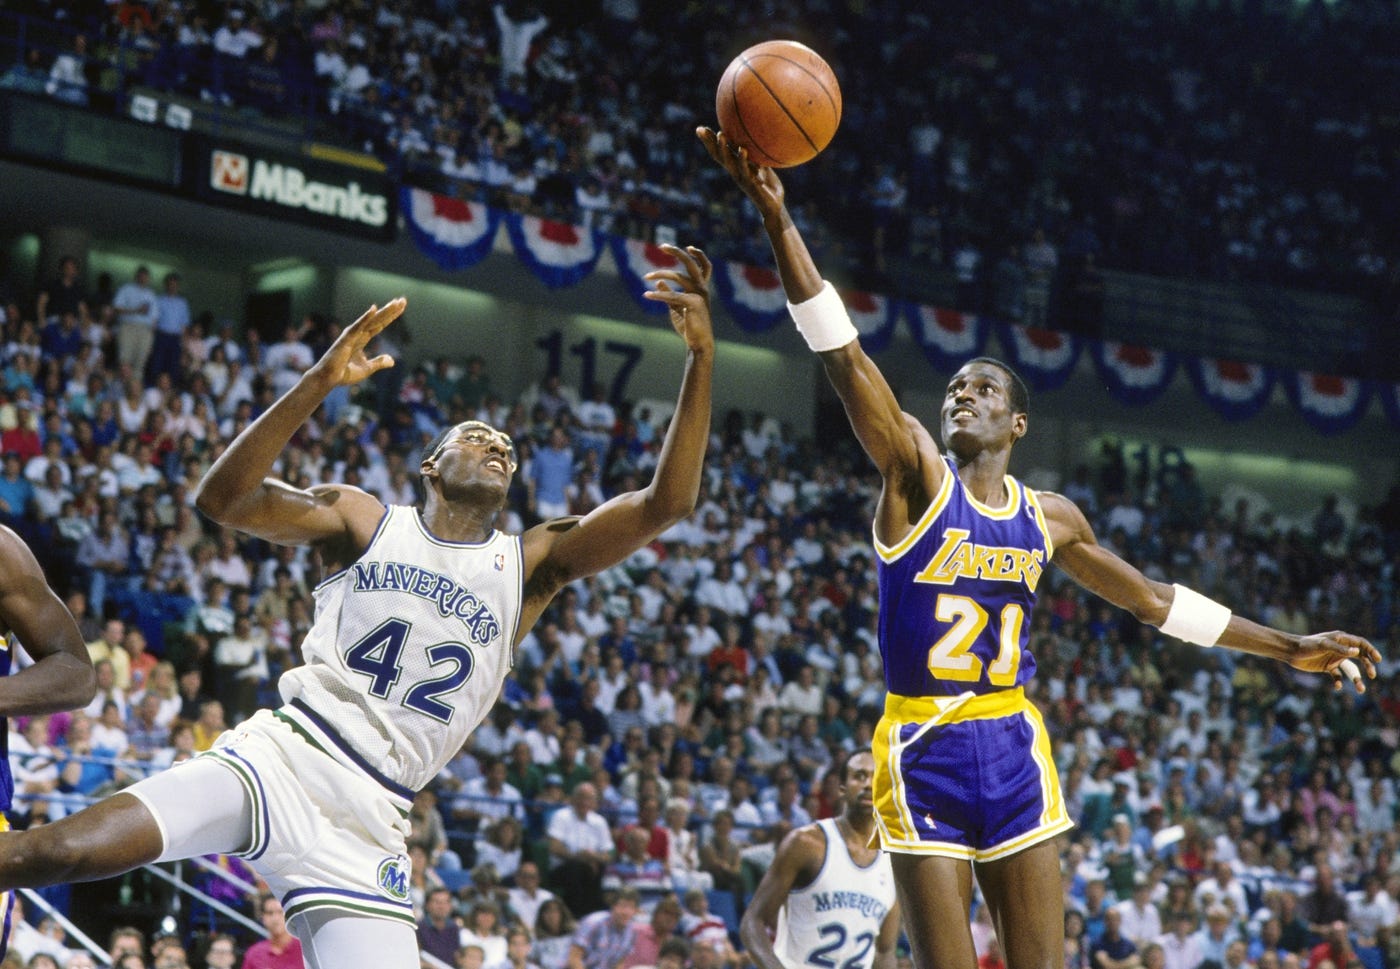 May 1988; Dallas, TX, USA; FILE PHOTO; Los Angeles Lakers forward Michael Cooper (21) shoots over Dallas Mavericks forward Roy Tarpley (42) during the 1988 NBA Western Conference Finals at Reunion Arena. Mandatory Credit: MPS-USA TODAY Sports